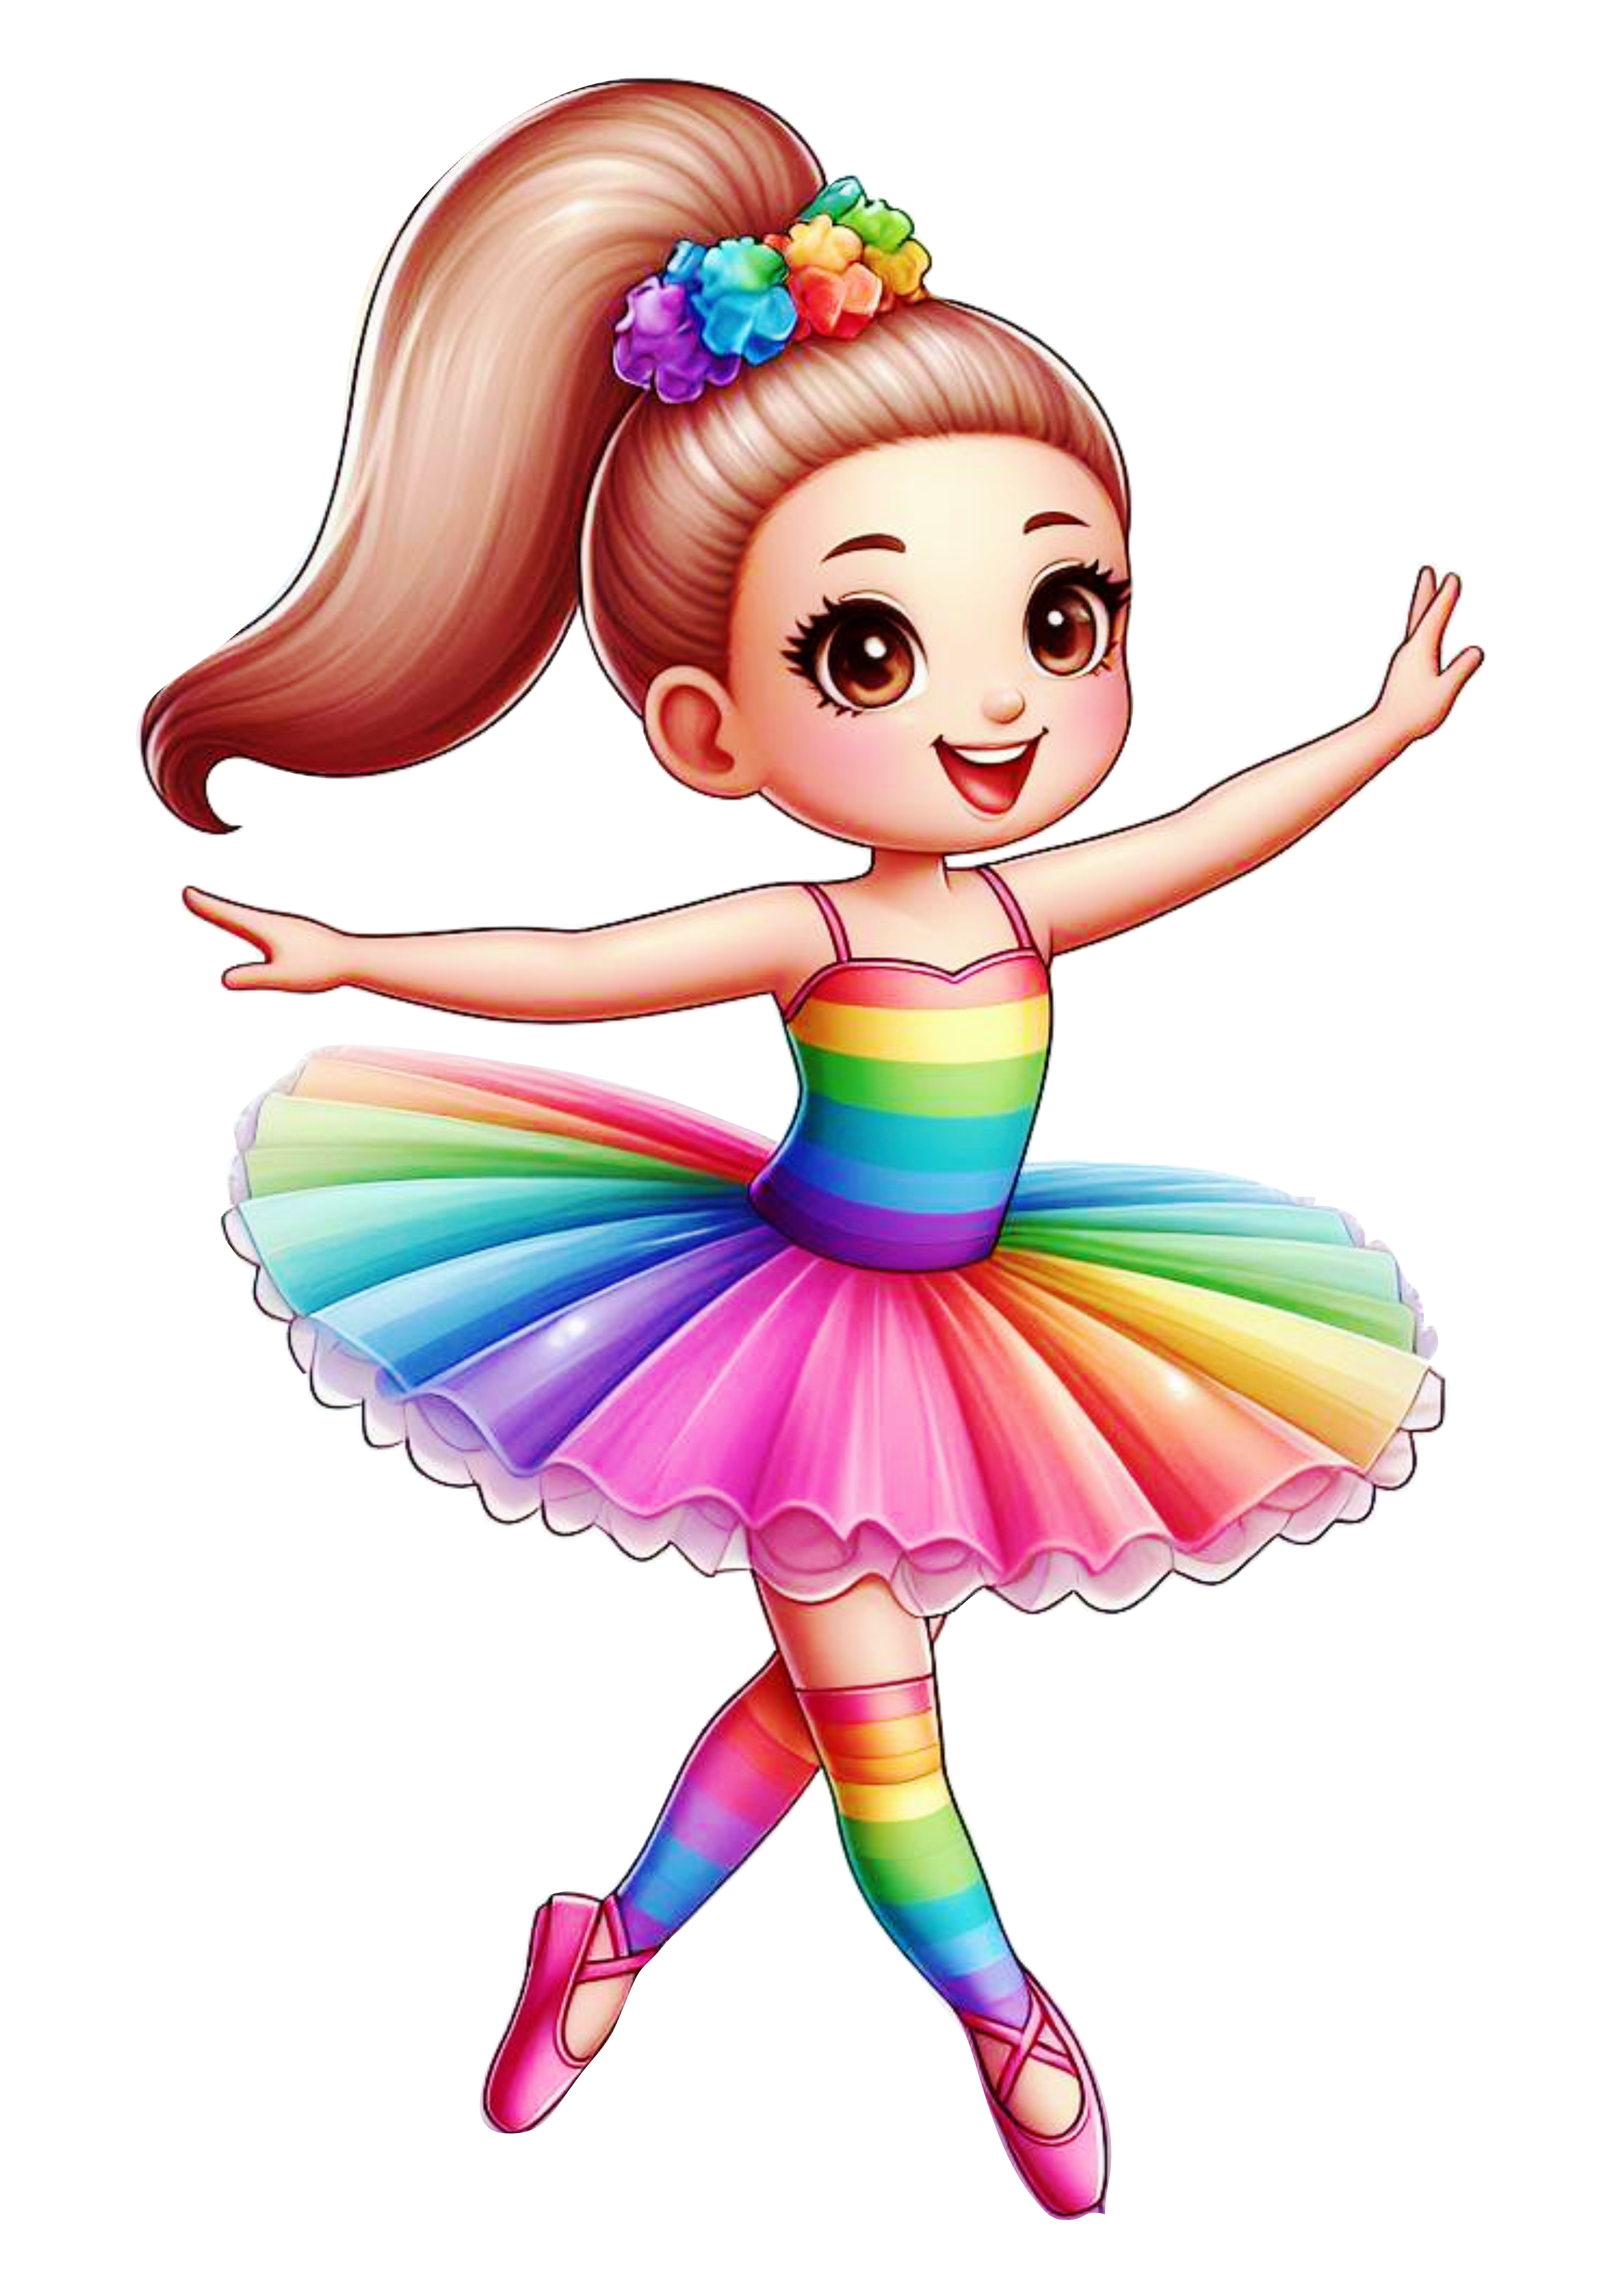 Bailarina menina com roupa colorida arco-íris desenho infantil png